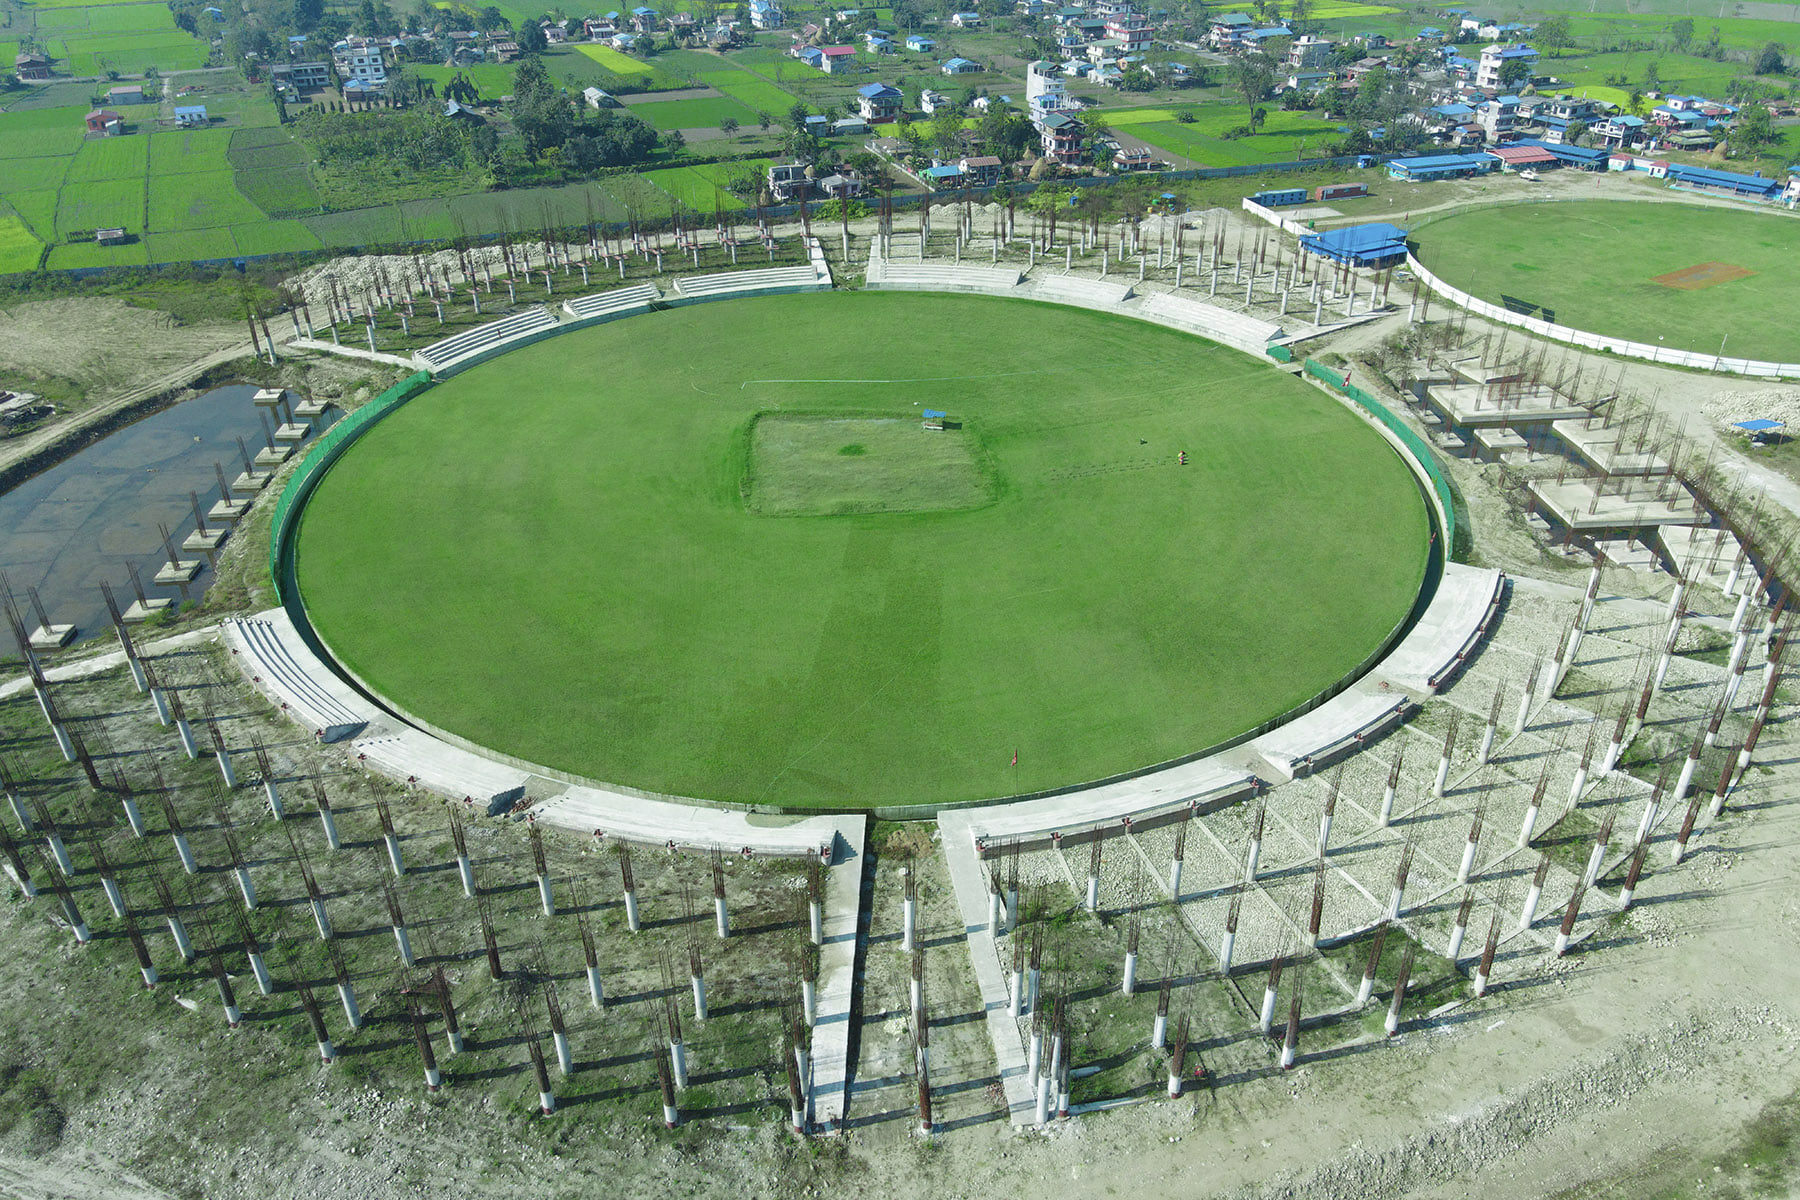 Federal govt asked to take ownership and resume construction of Gautam Buddha Cricket Stadium